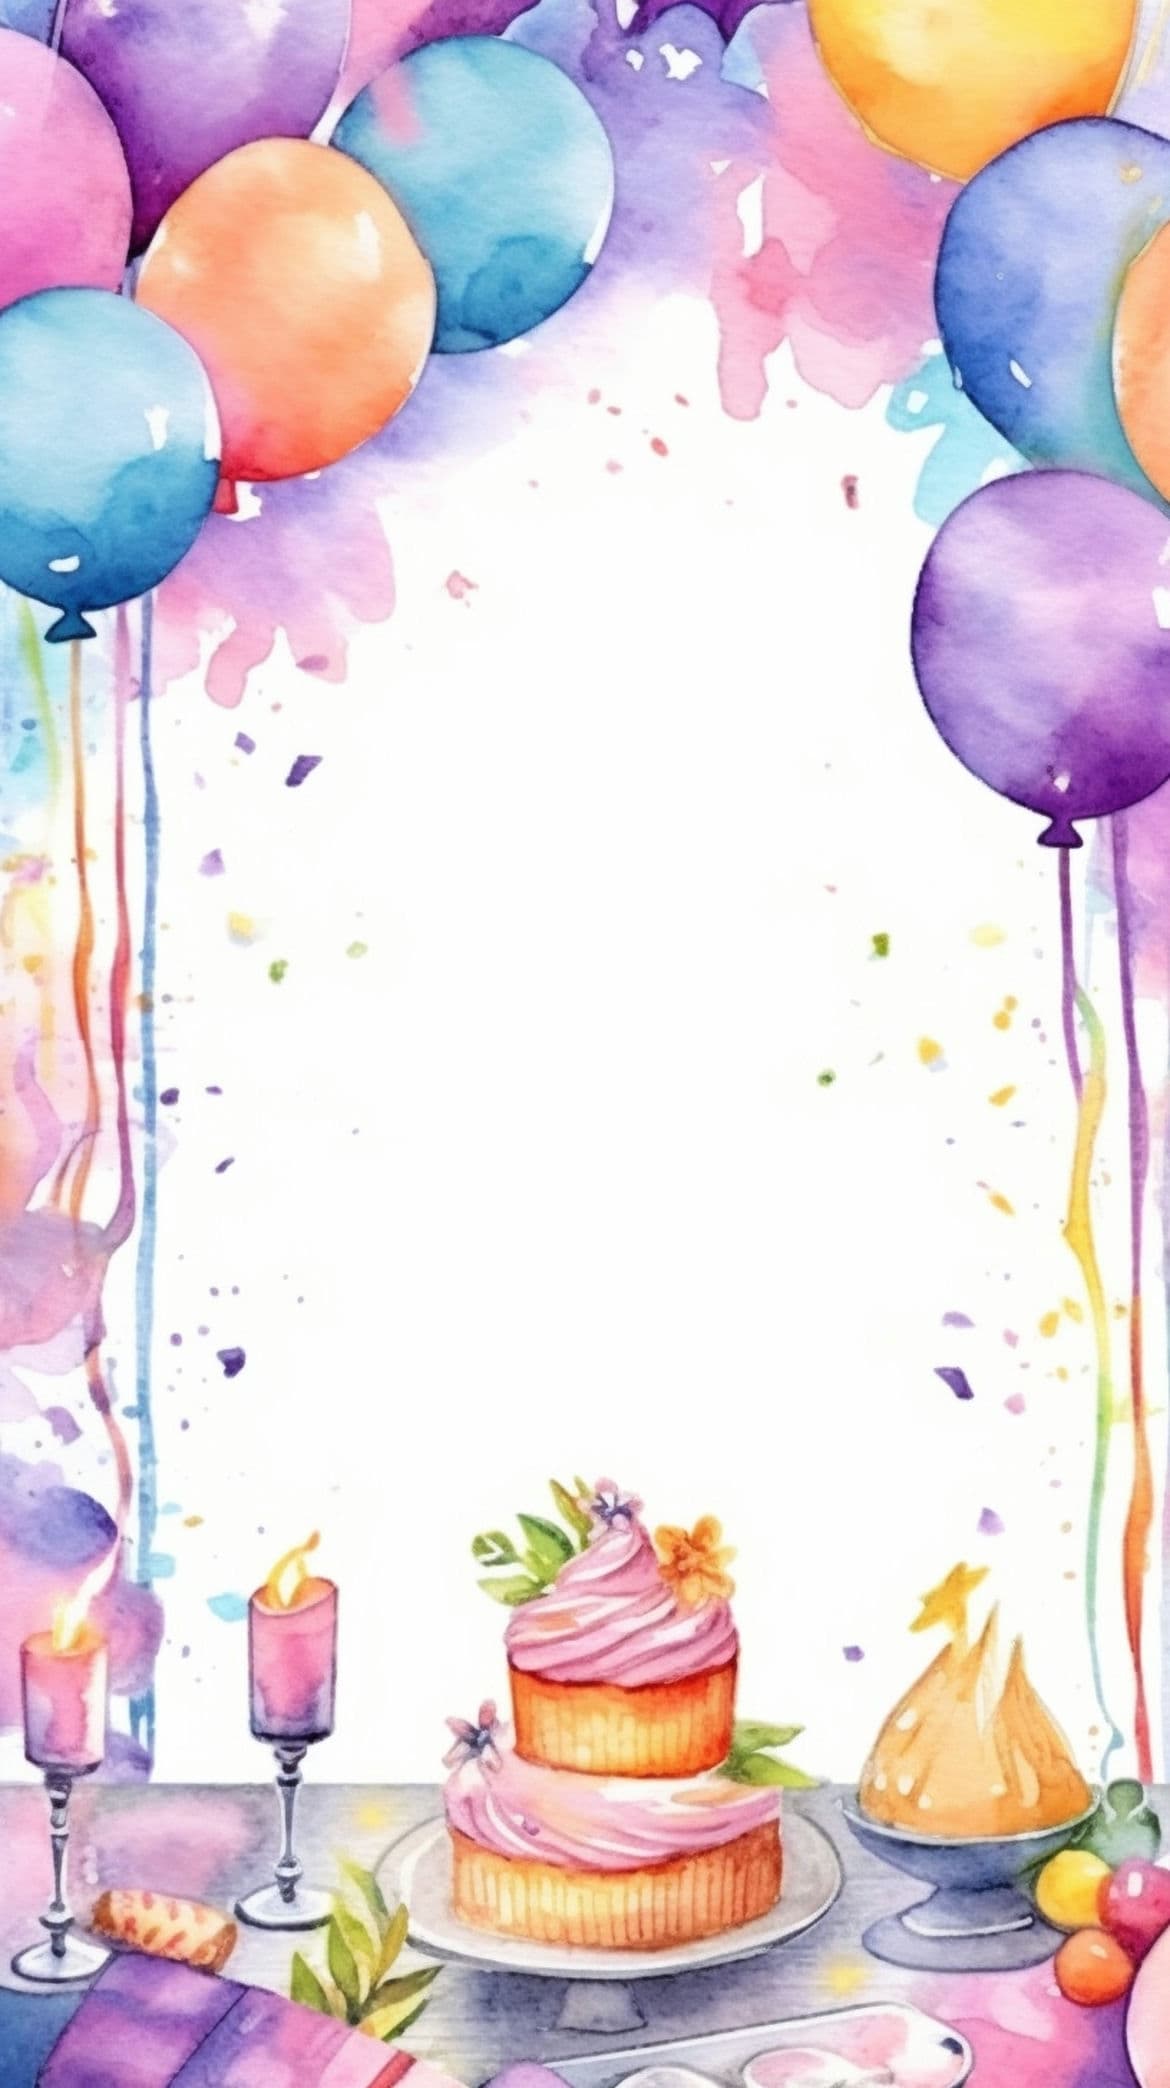 Balloons, birthday